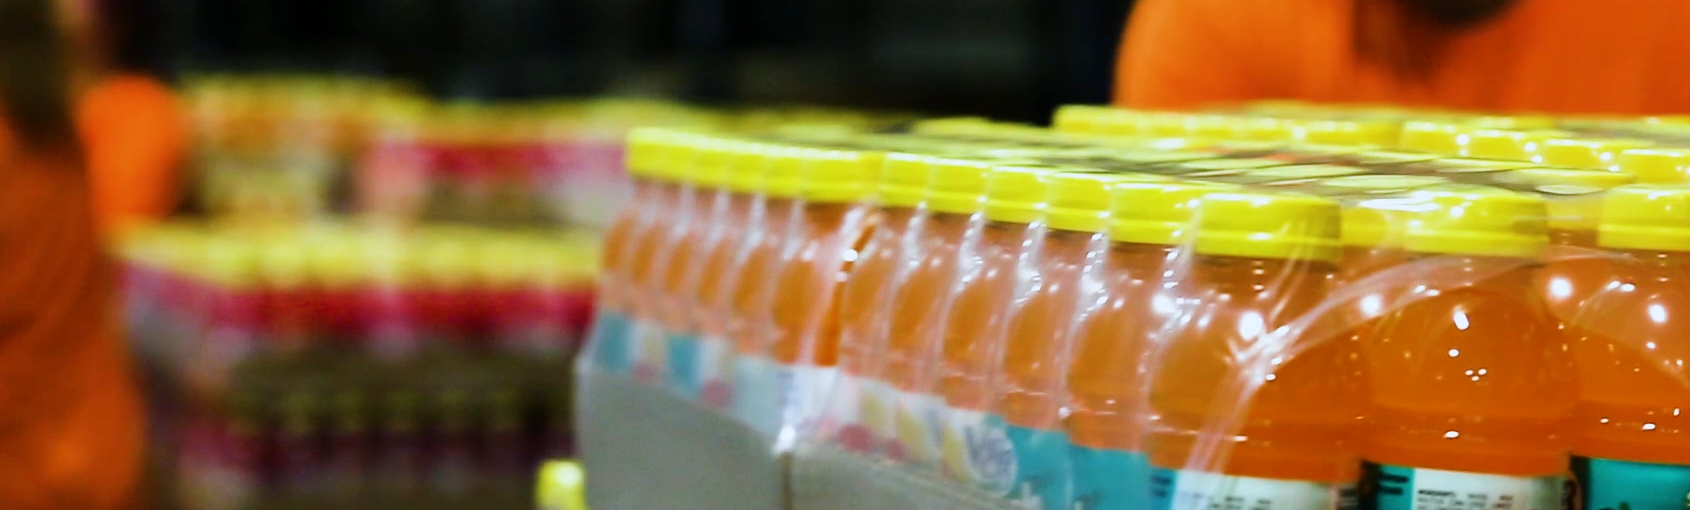 Orange drink bottles shrink wrapped in a carton